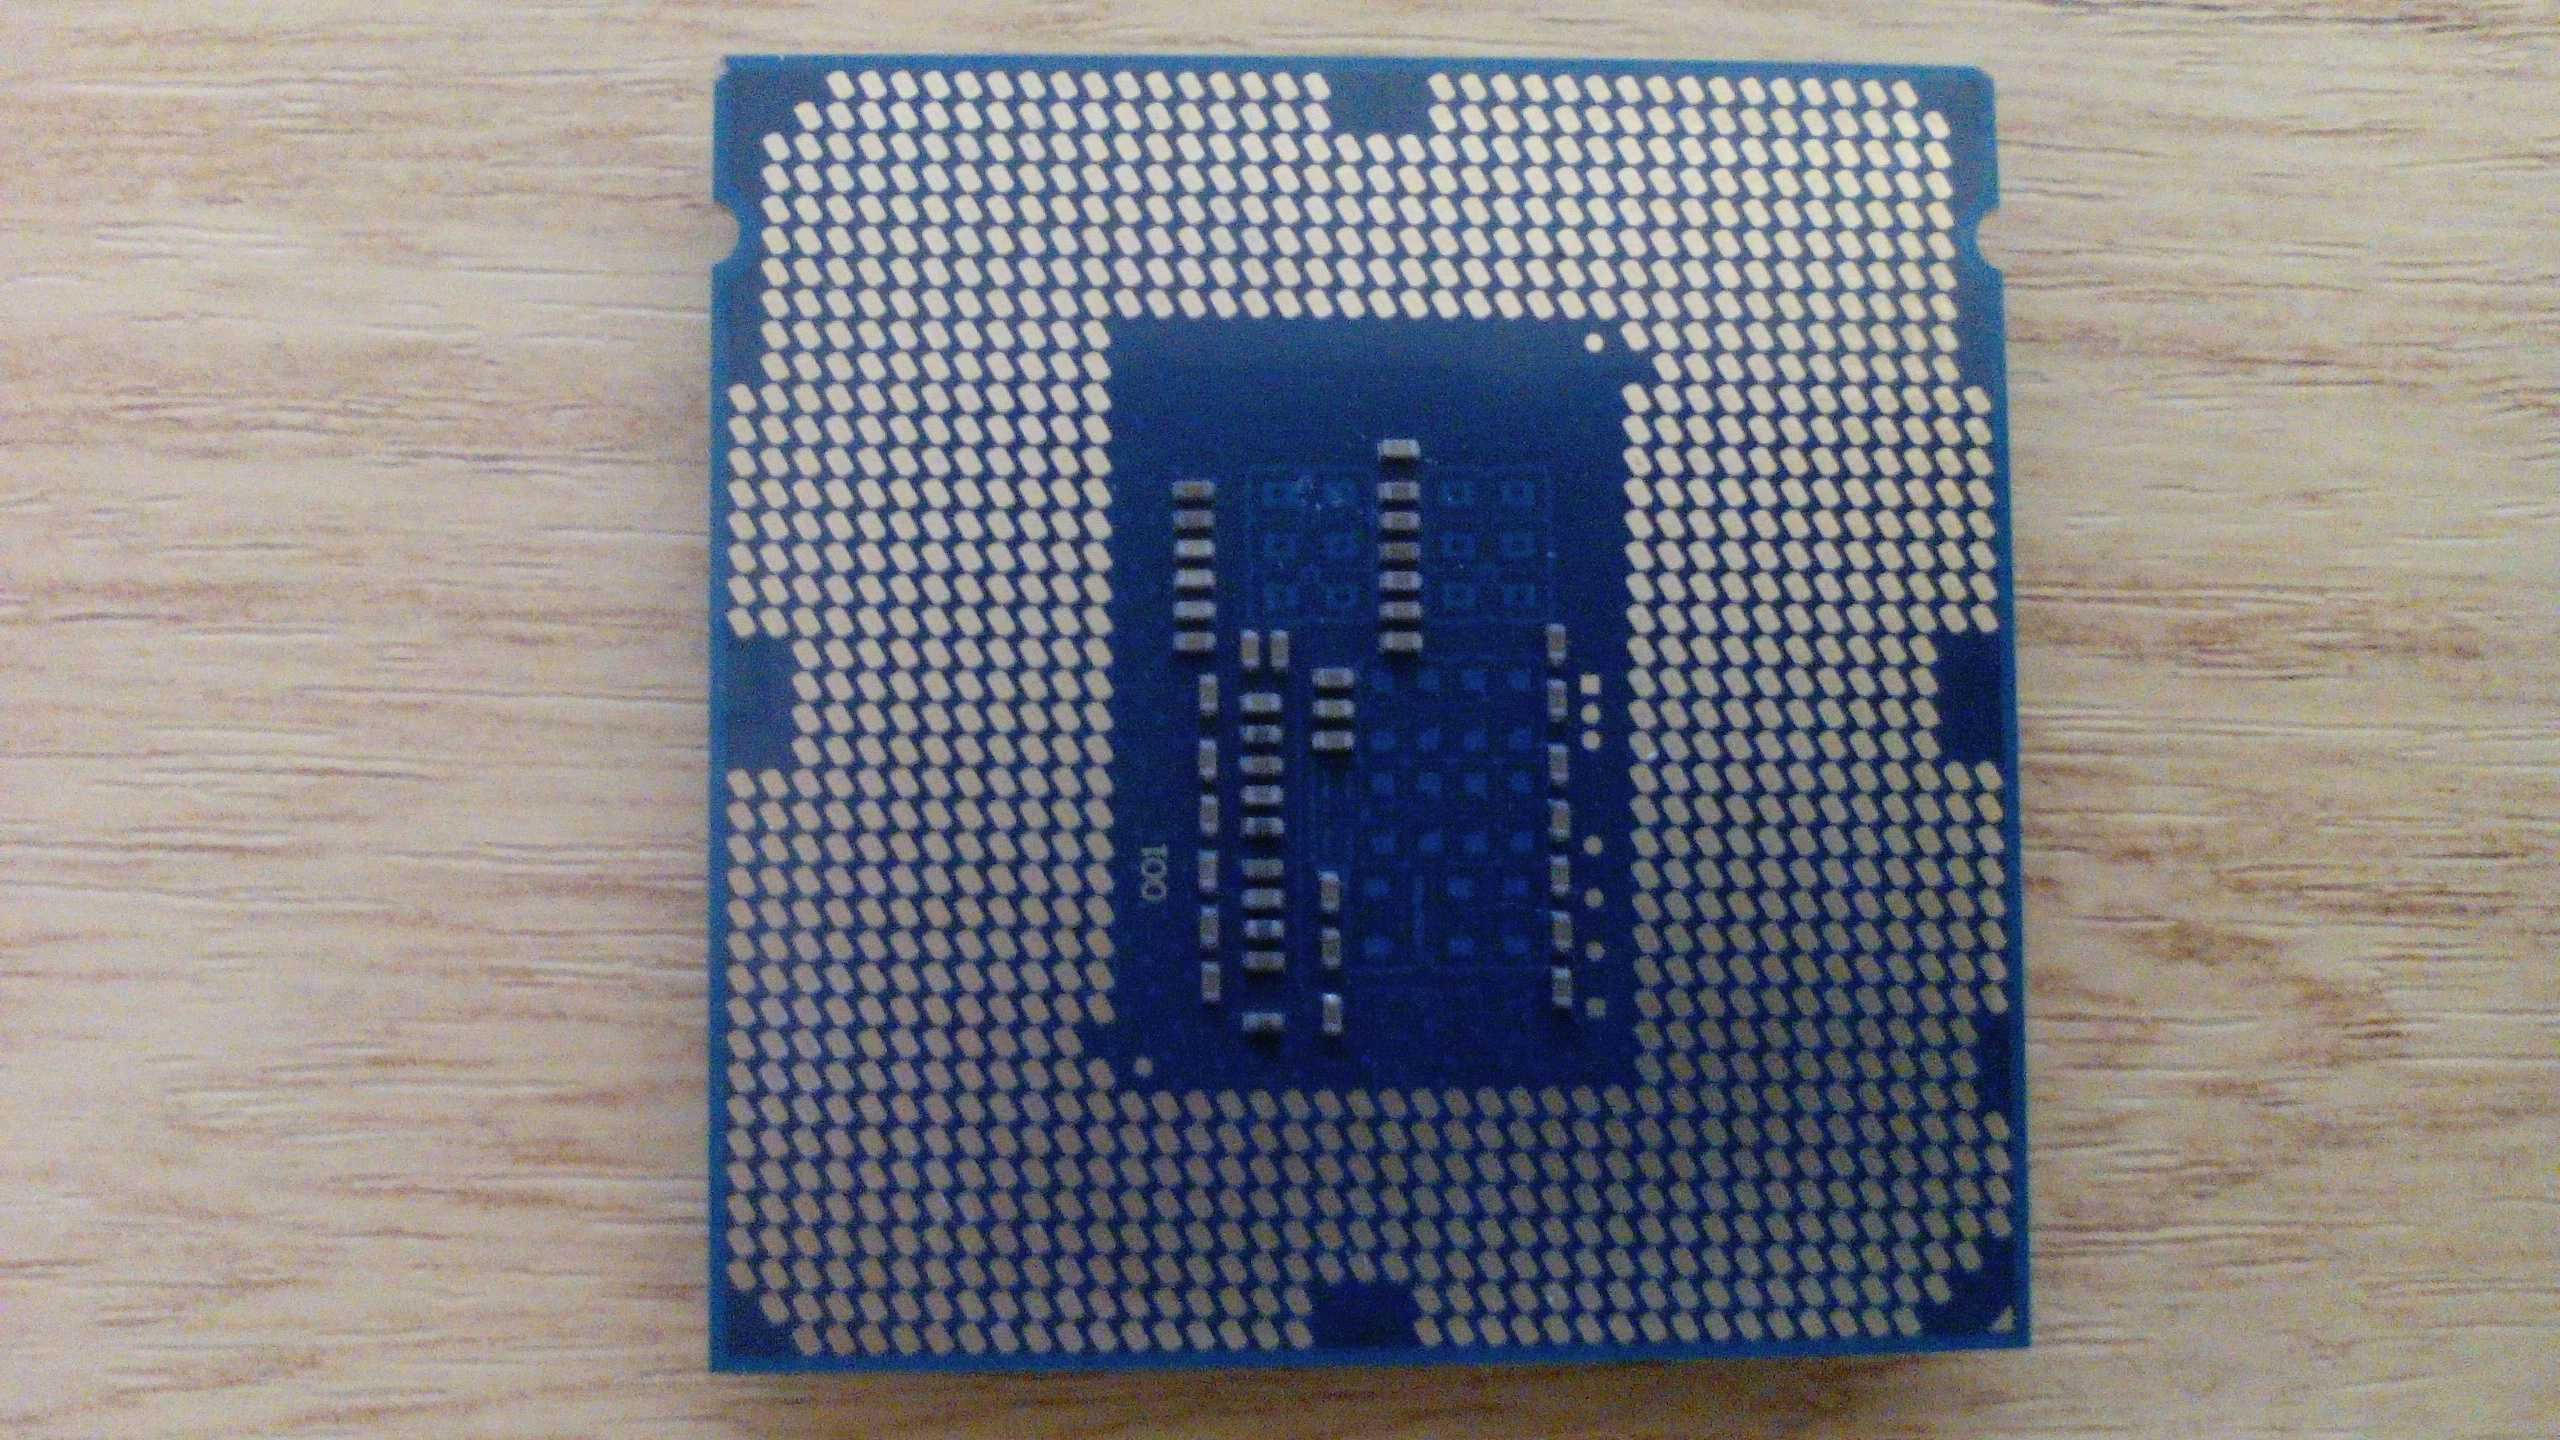 Intel® Pentium® G3430, 3M Cache, 3.30 GHz, socket 1150